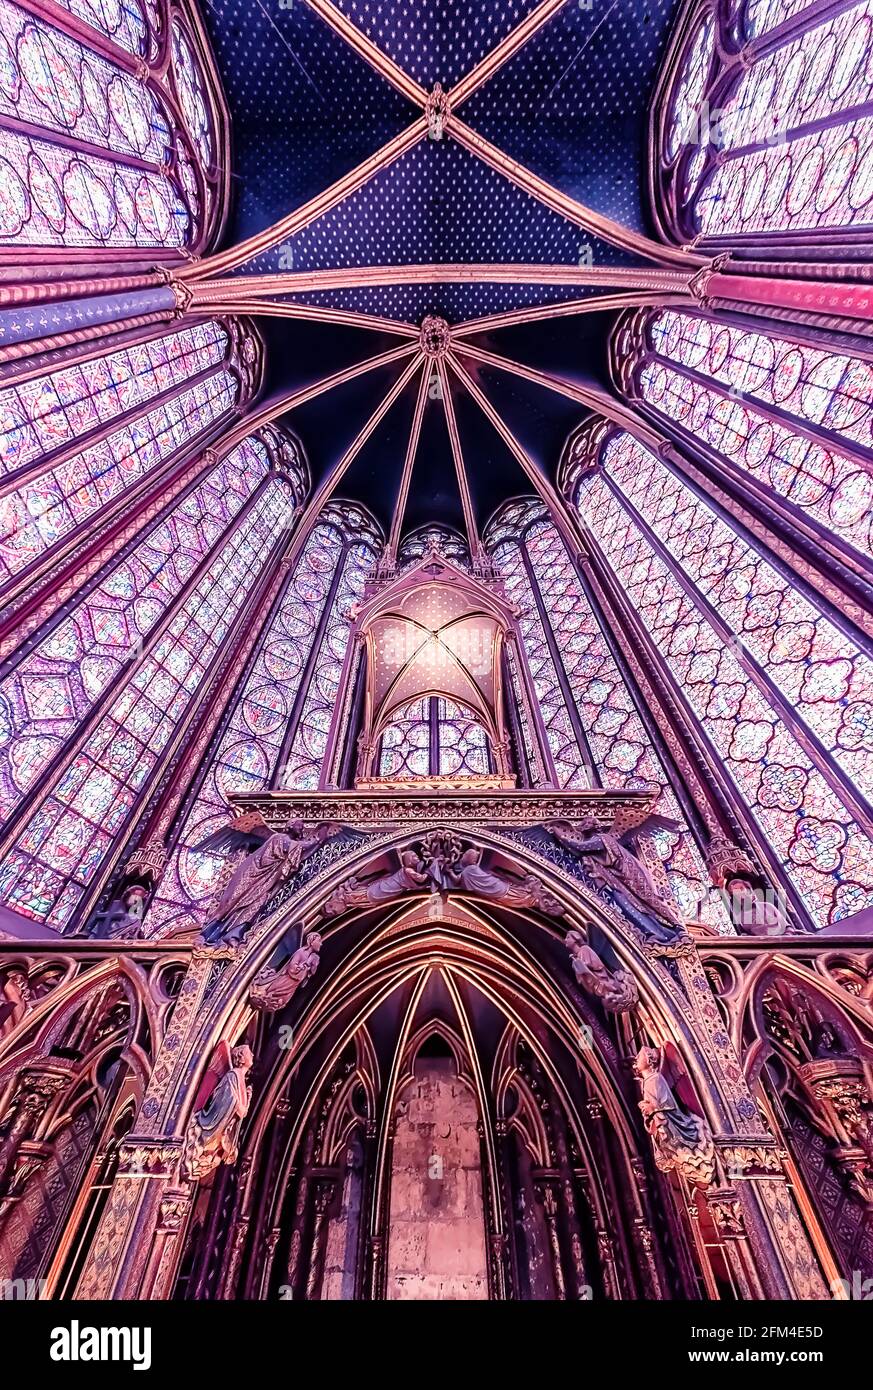 Inside the Sainte-Chapelle in Paris Stock Photo